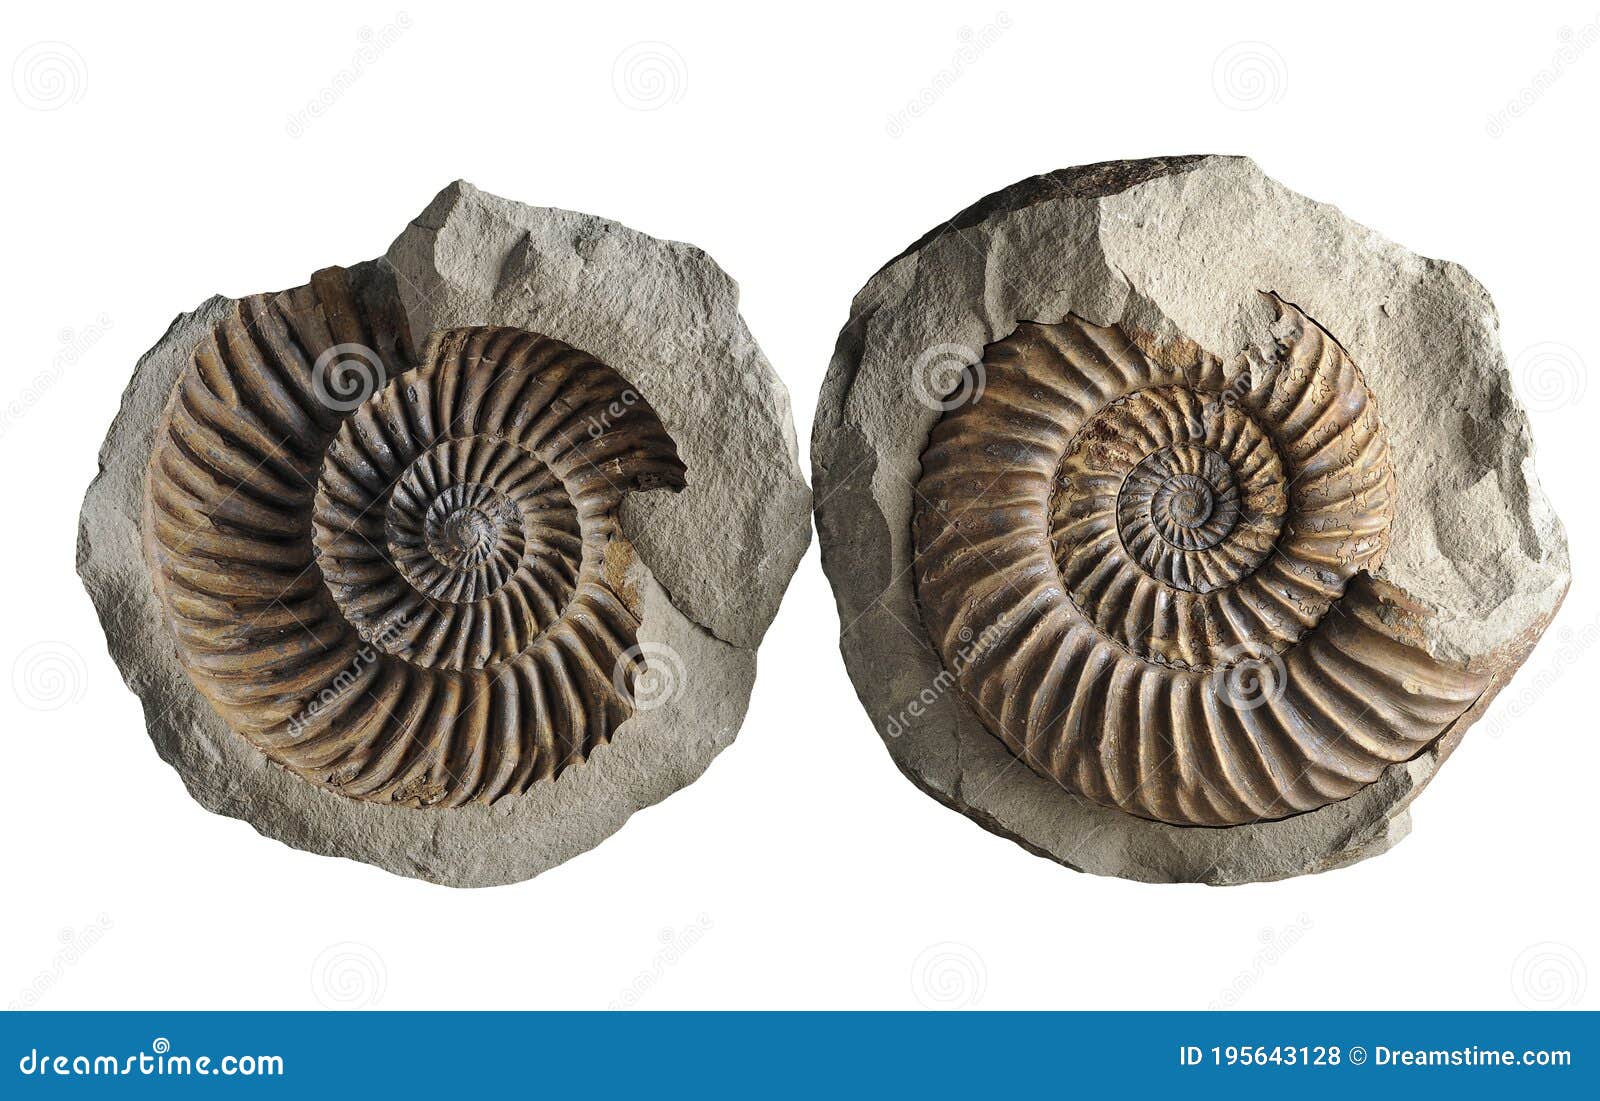 ammonite - fossil mollusk.